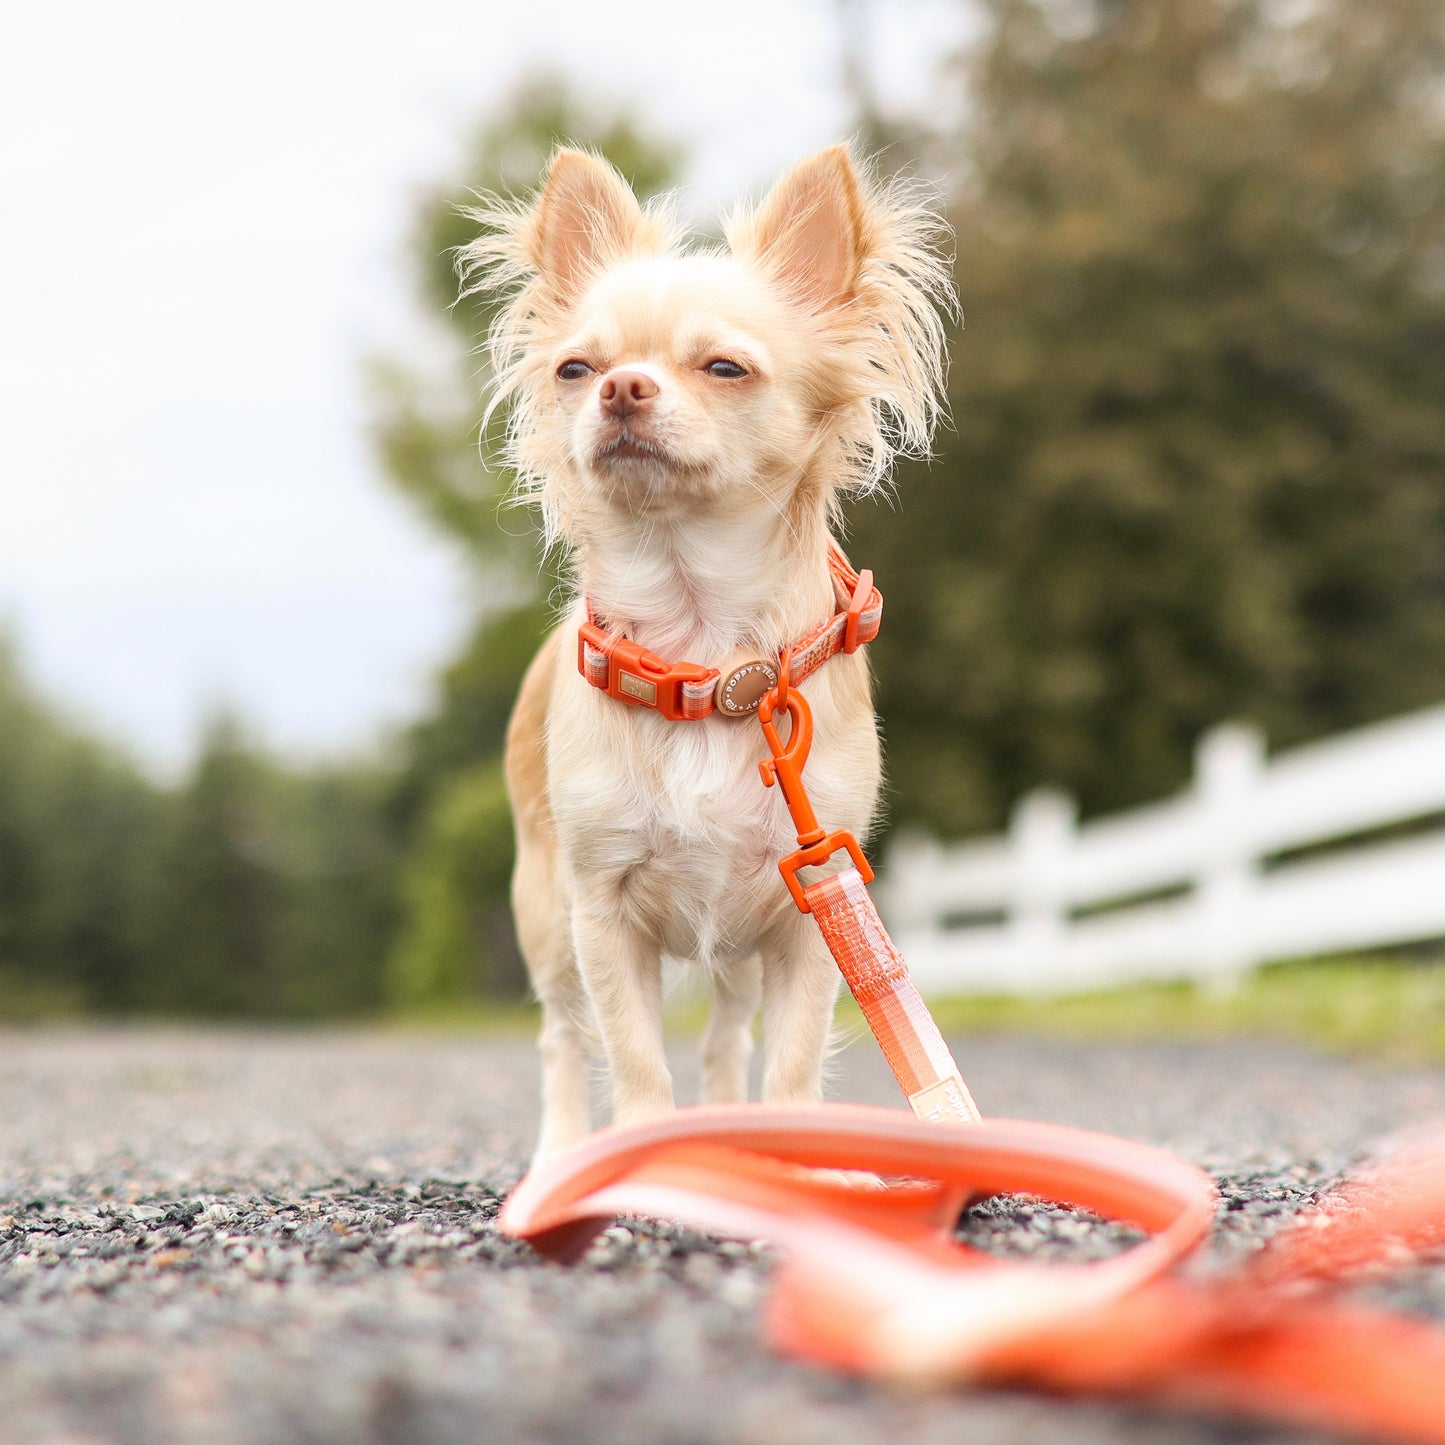 Ombré Essentials | Dog Collar | Auburn Orange